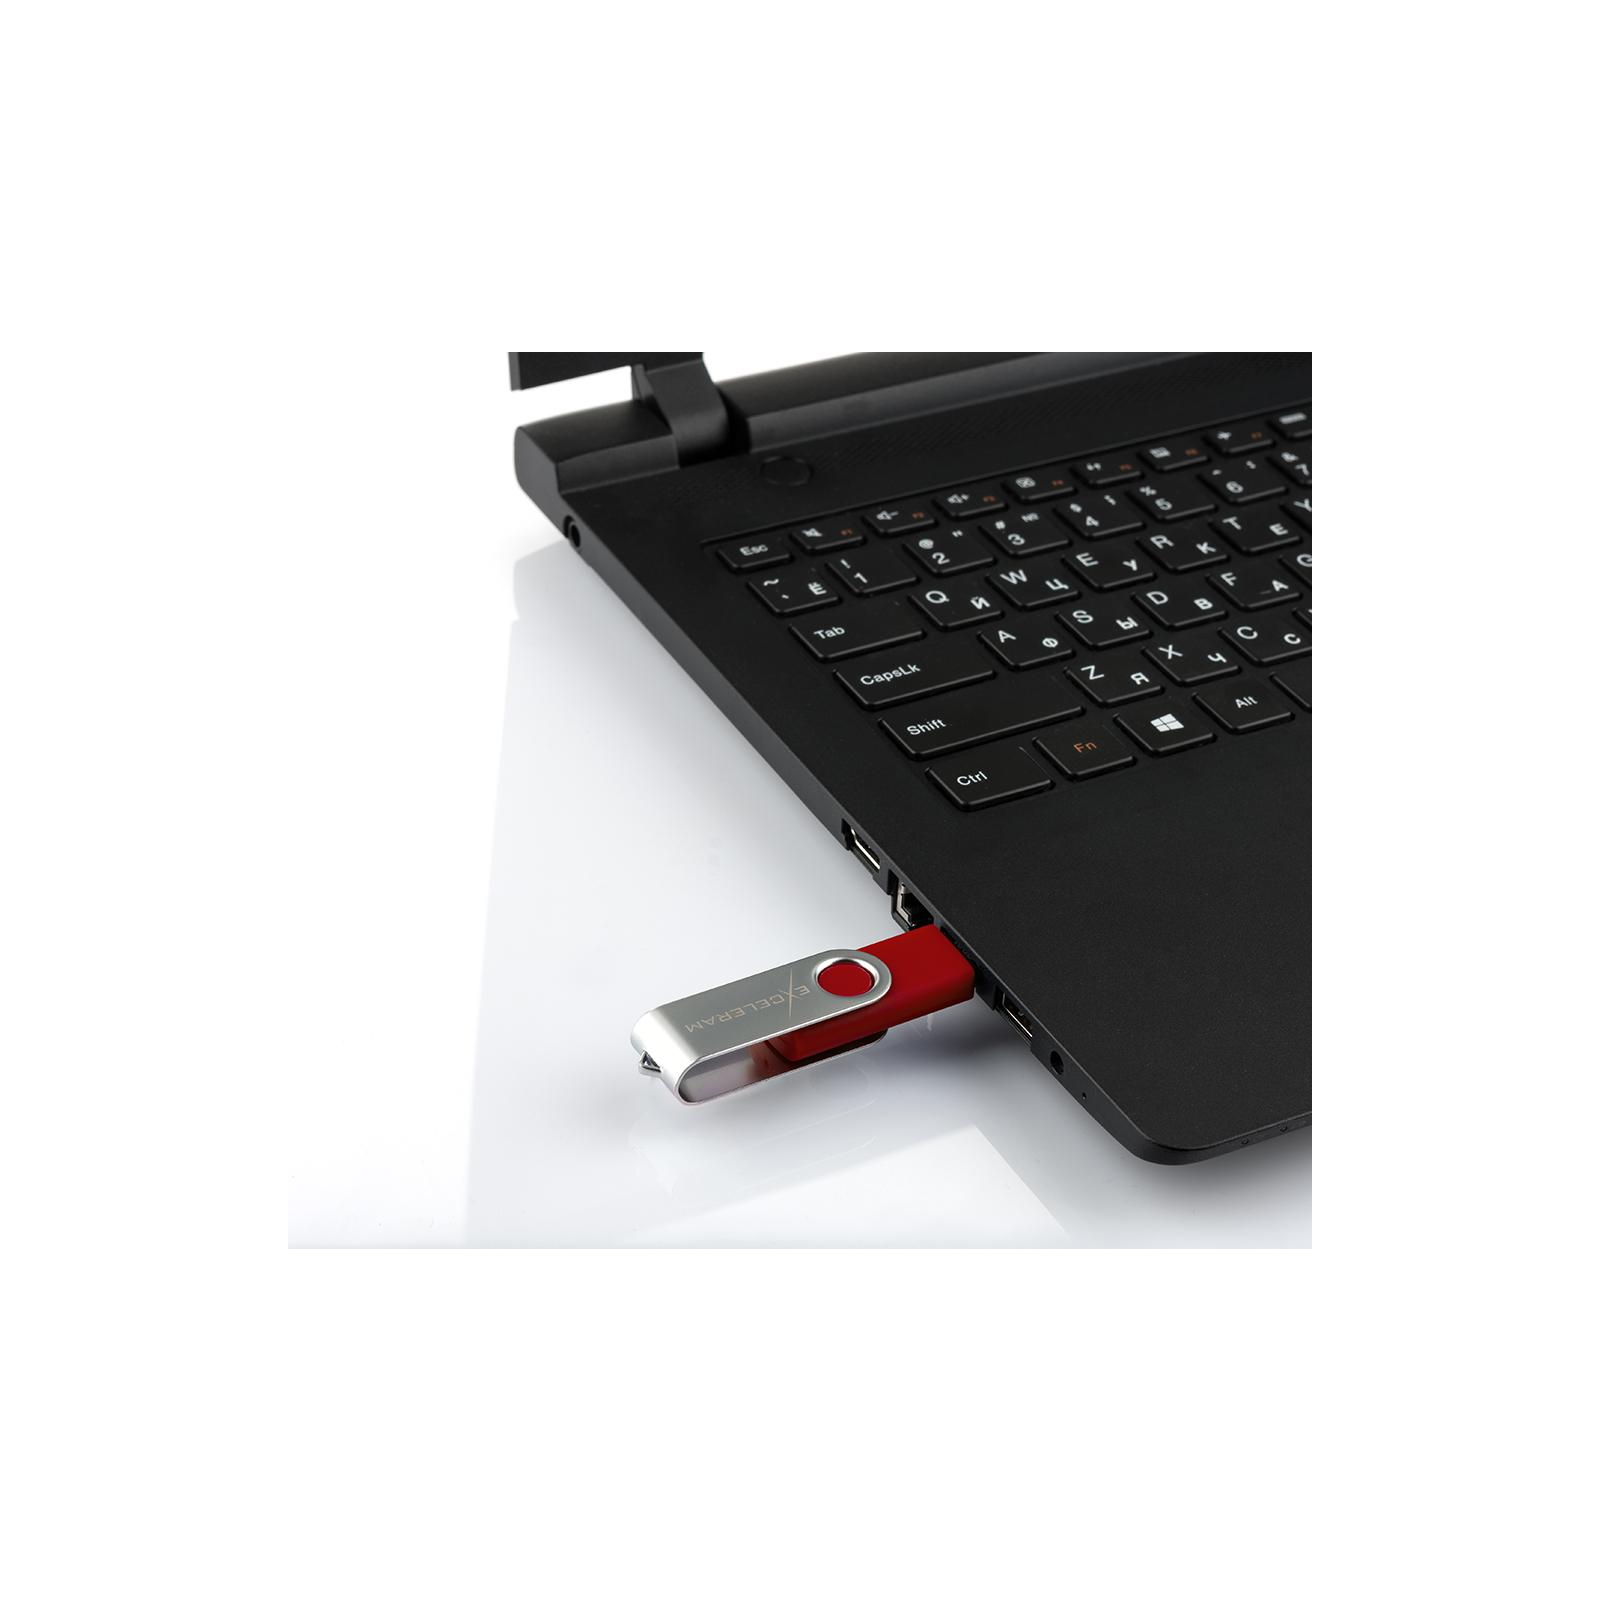 USB флеш накопитель eXceleram 16GB P1 Series Silver/Red USB 2.0 (EXP1U2SIRE16) изображение 7